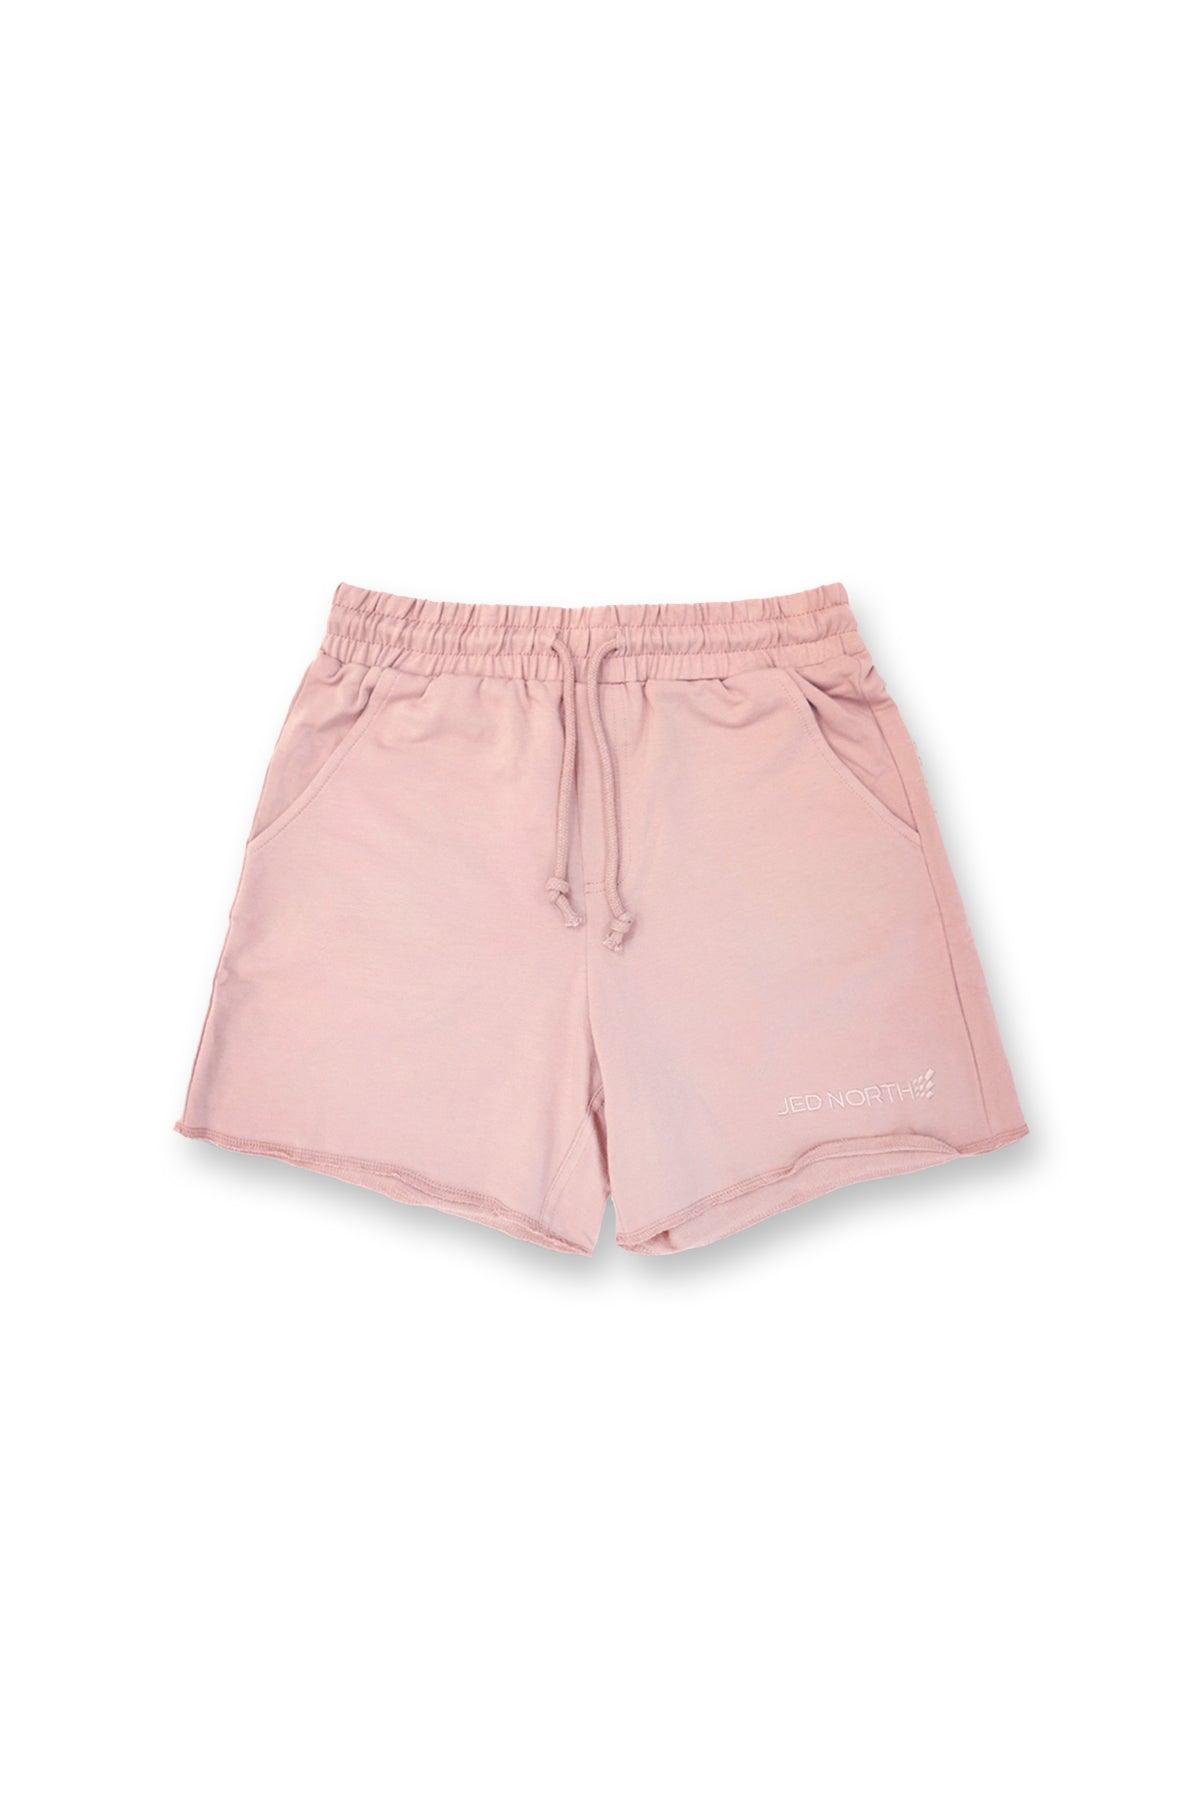 Motion 5'' Varsity Sweat Shorts - Light Pink